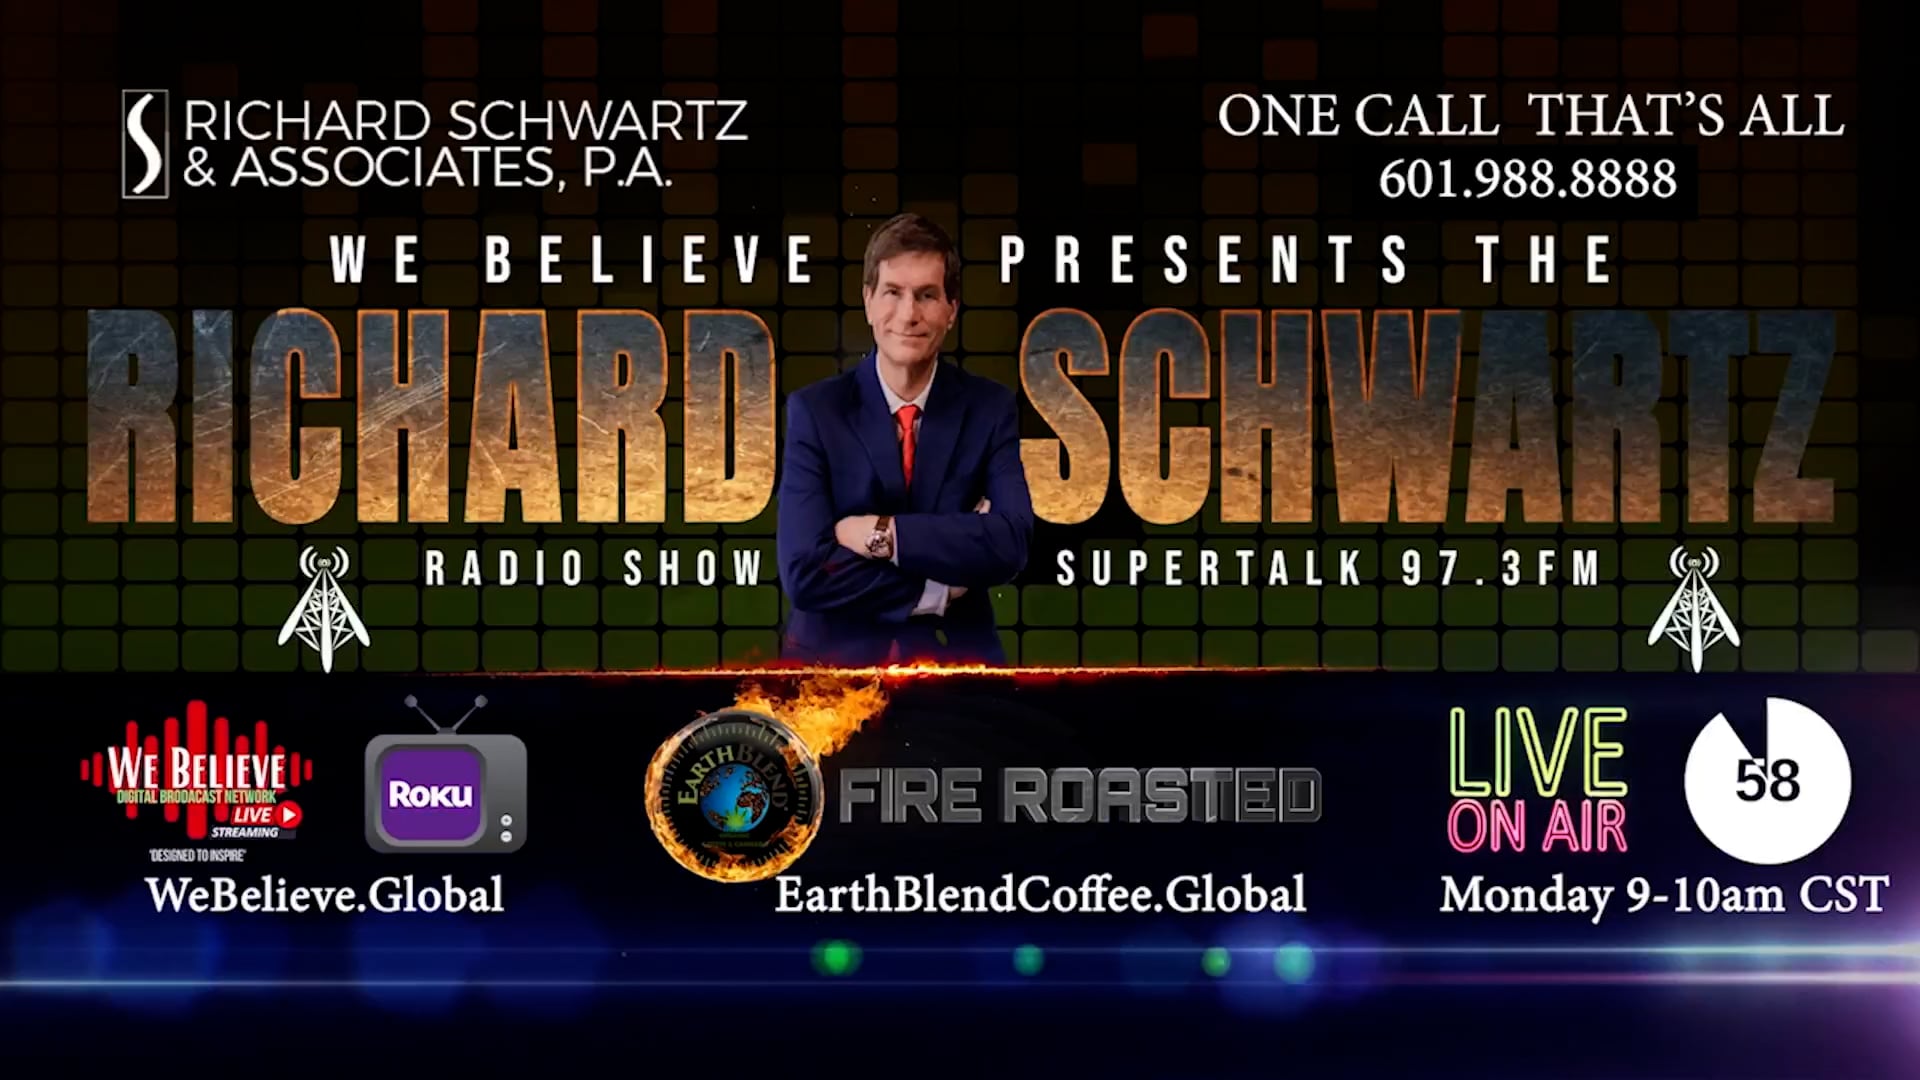 THE RICHARD SCHWARTZ POWER HOUR - GUEST HOST: BRENT HAZZARD - SUPER TALK 97.3FM - 1.10.21